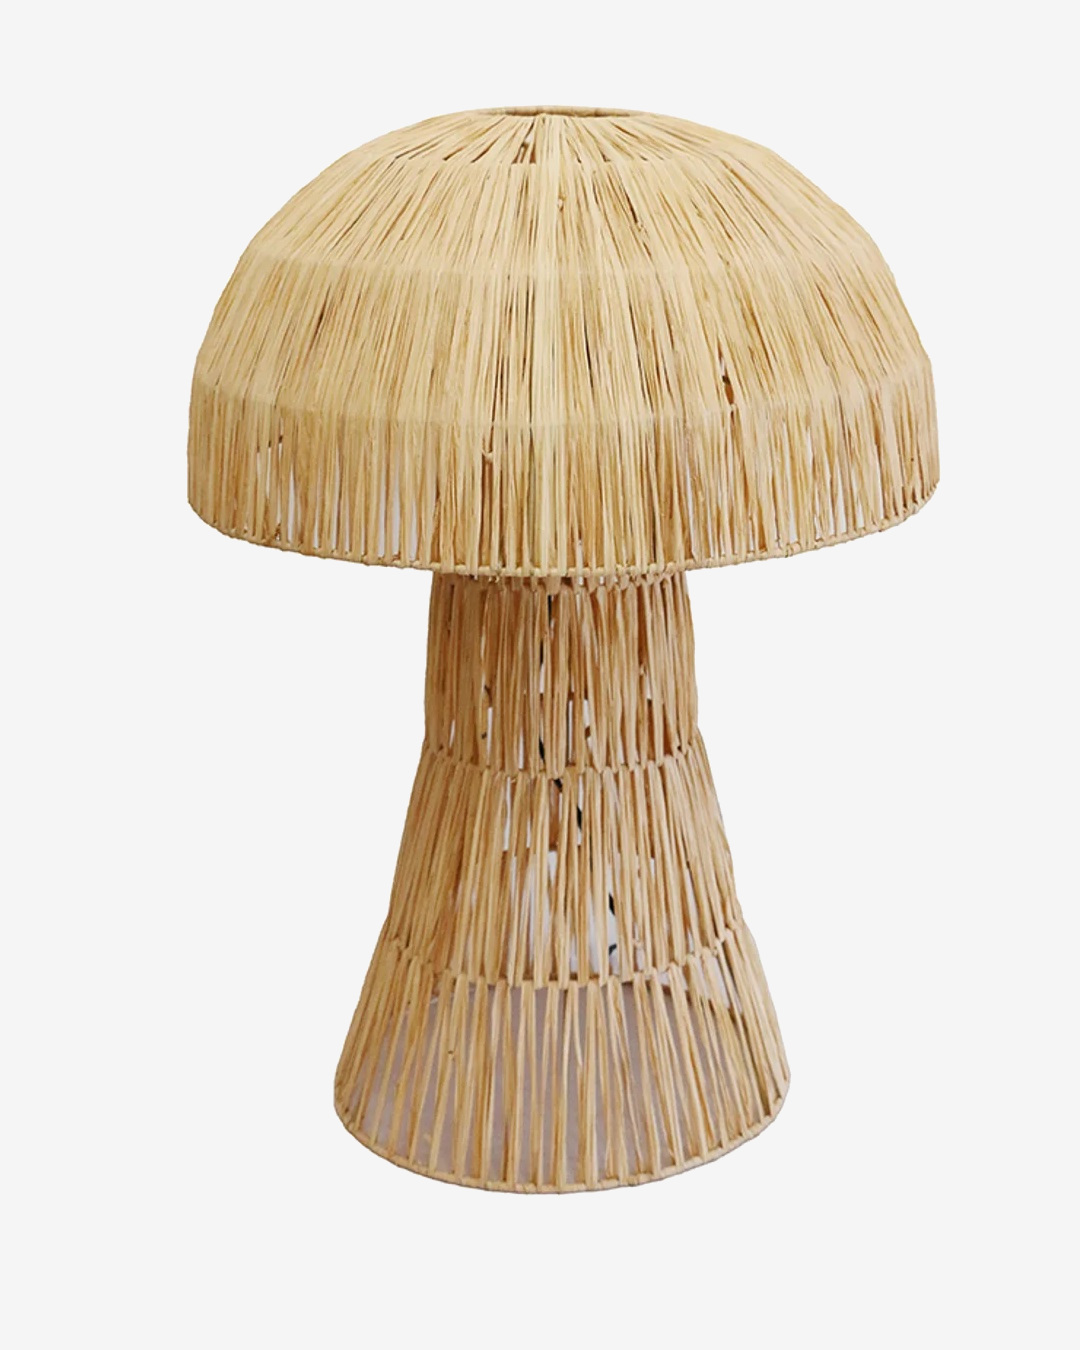 Woven mushroom lamp and shade